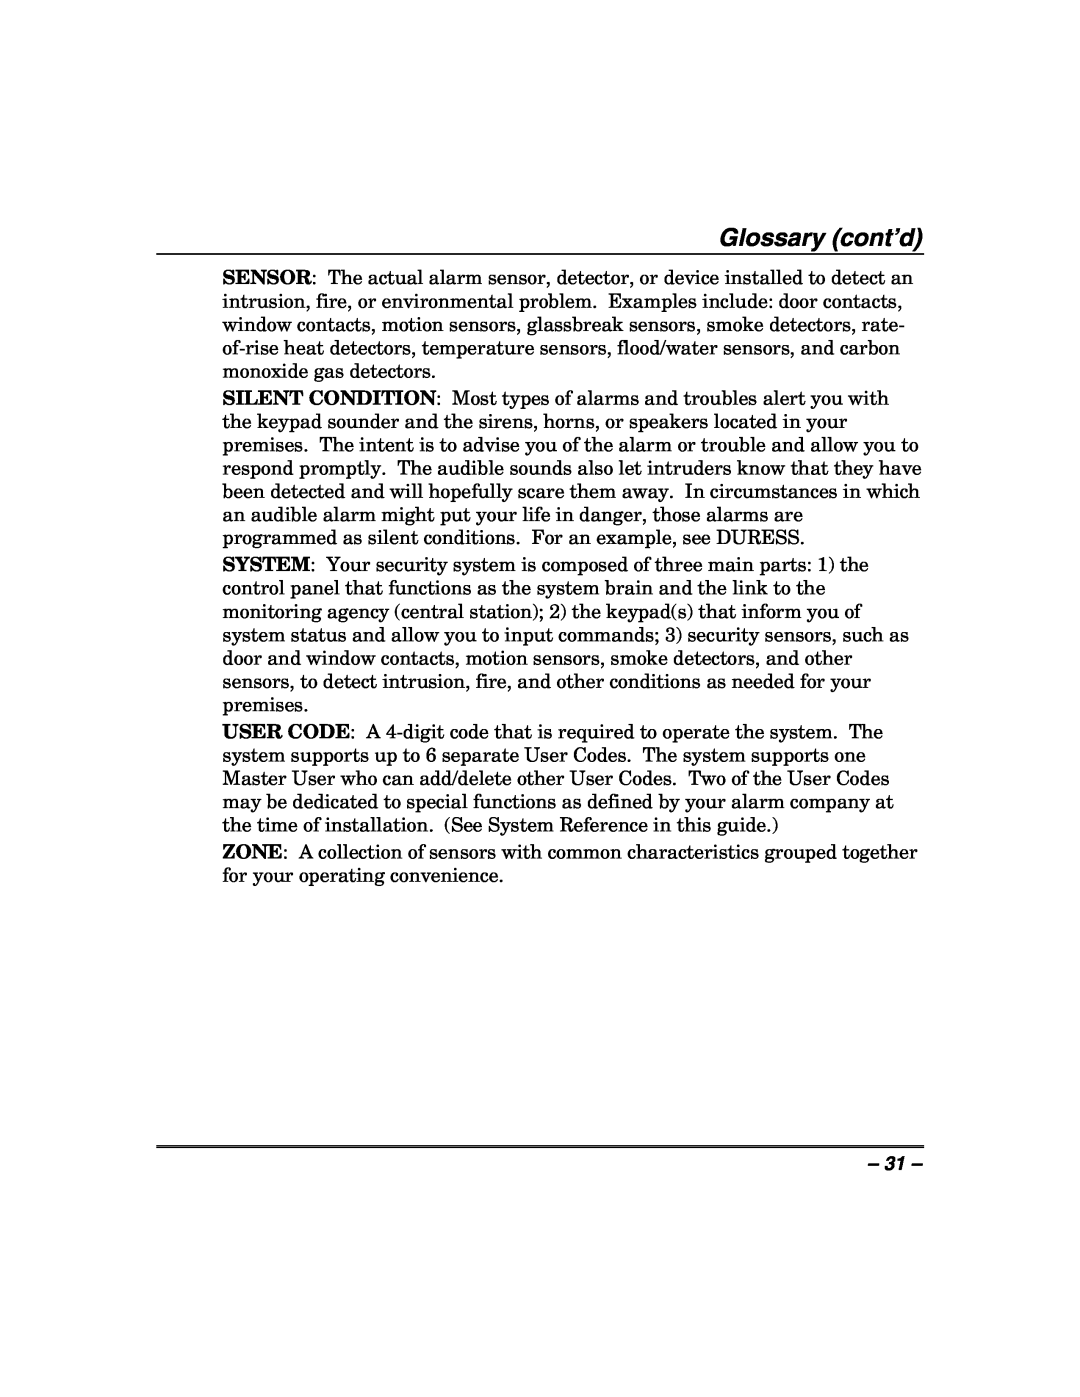 Honeywell 408EU manual Glossary cont’d 